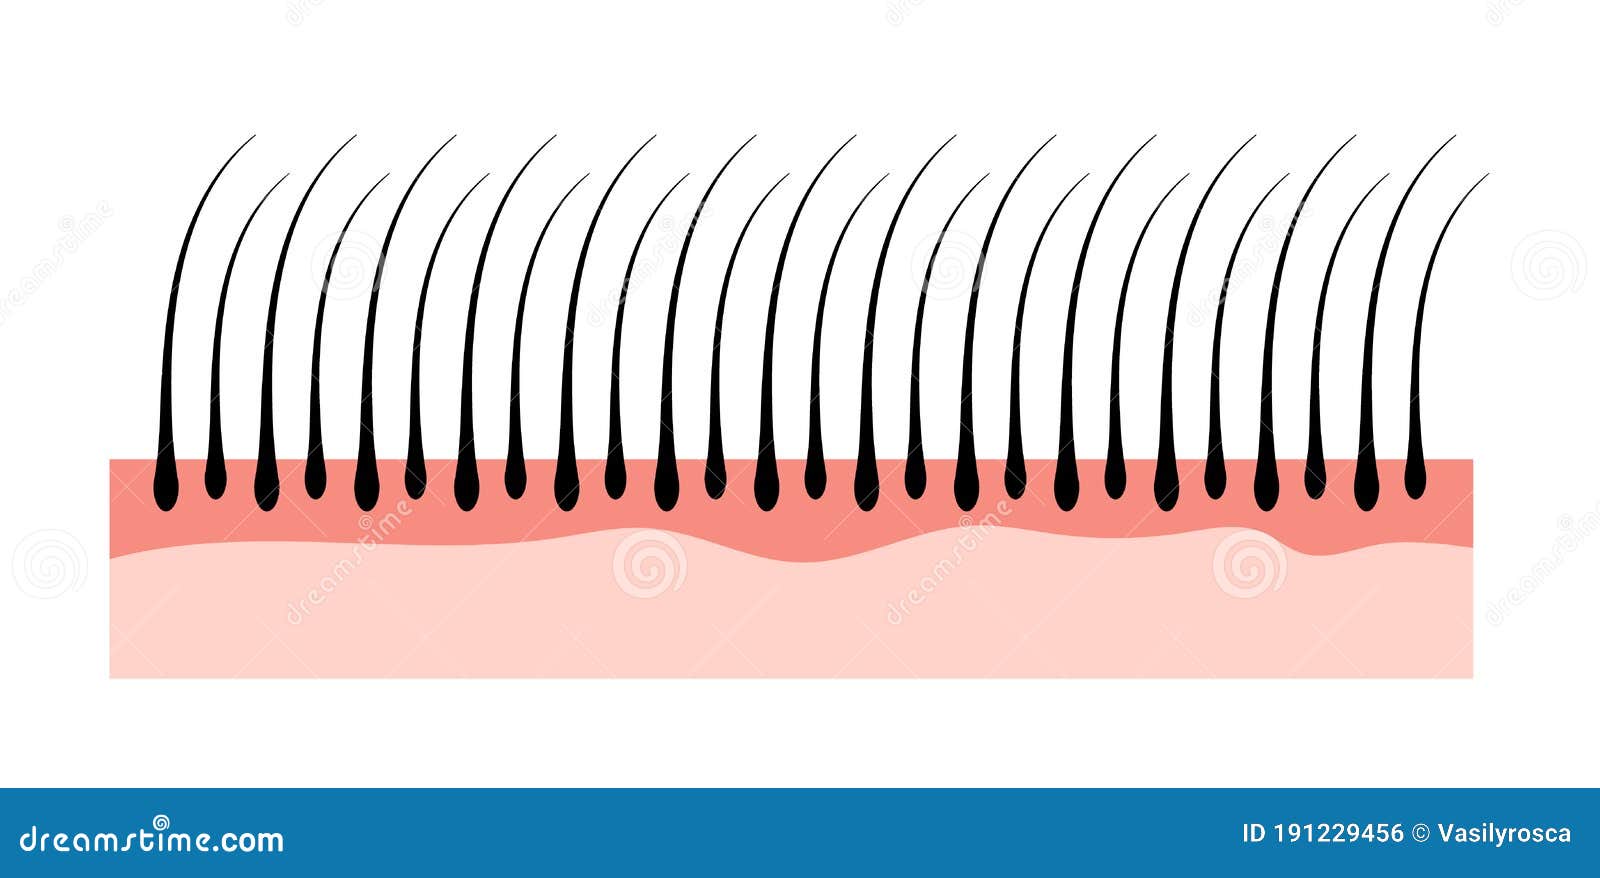 human hair skin structure growth epidermis. hair anatomy concept